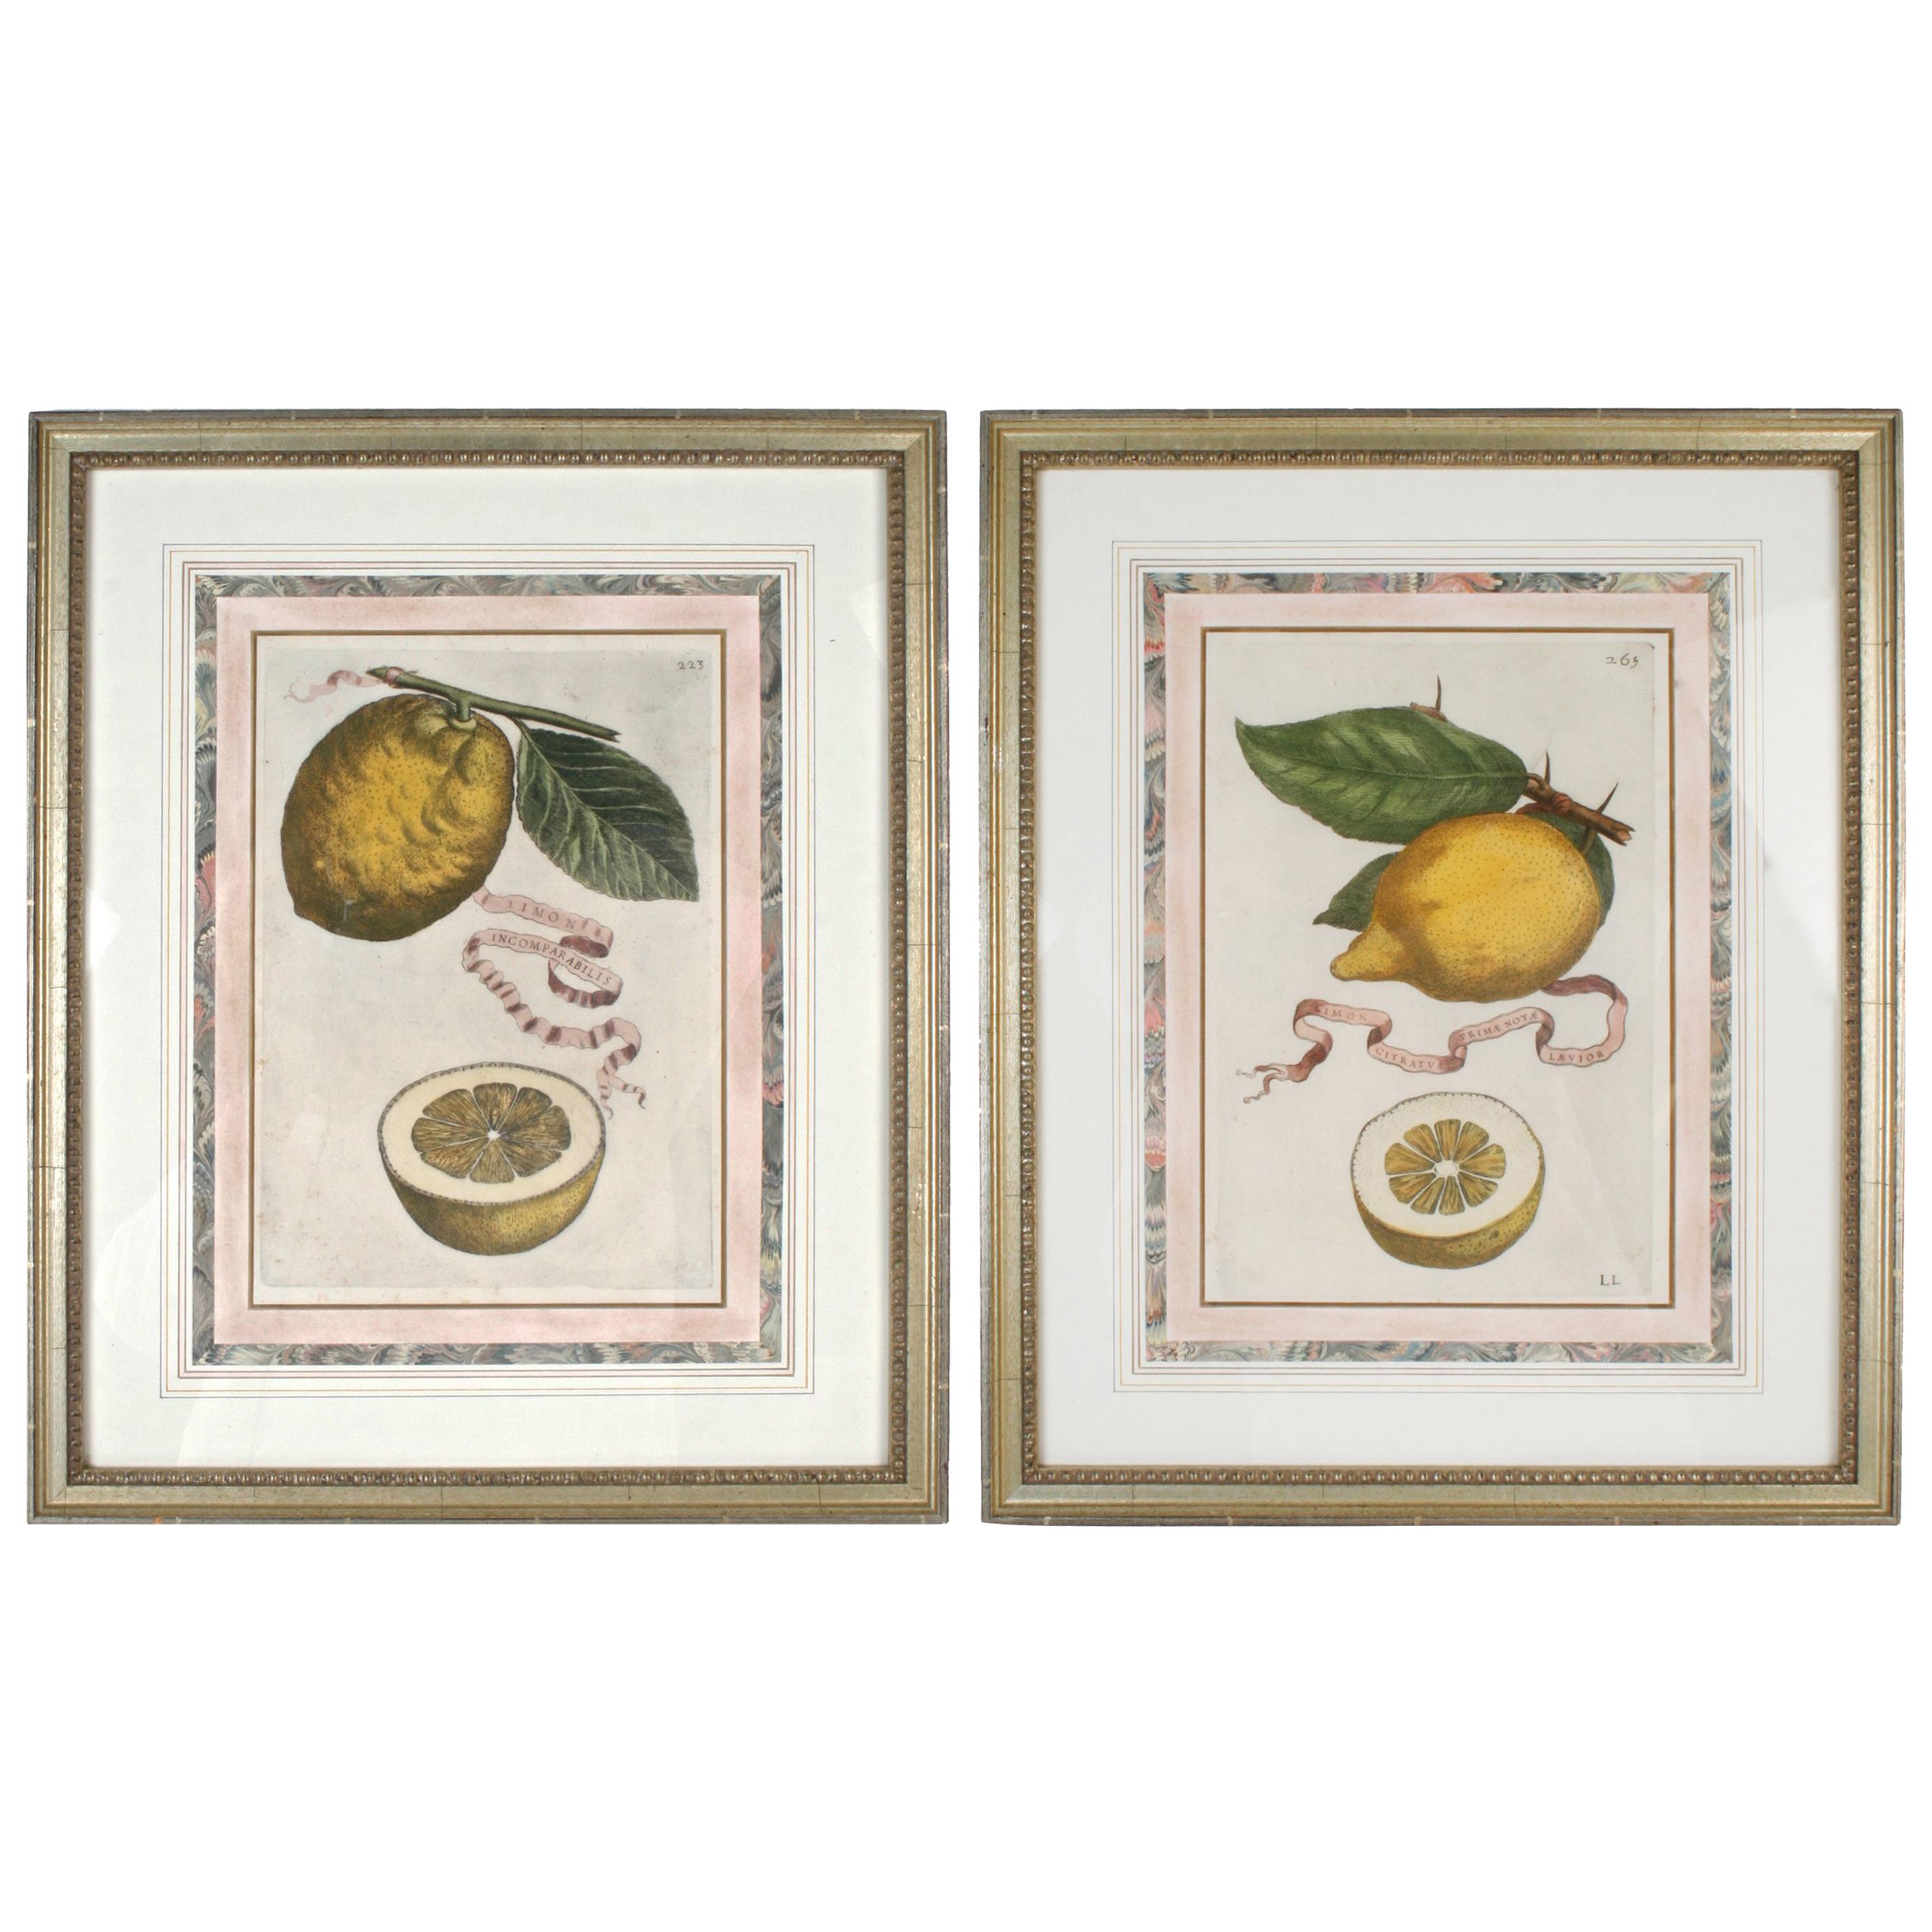 Lemon Botanical Engravings Attributed to Fiovanni Battista Ferrari, c1646 For Sale